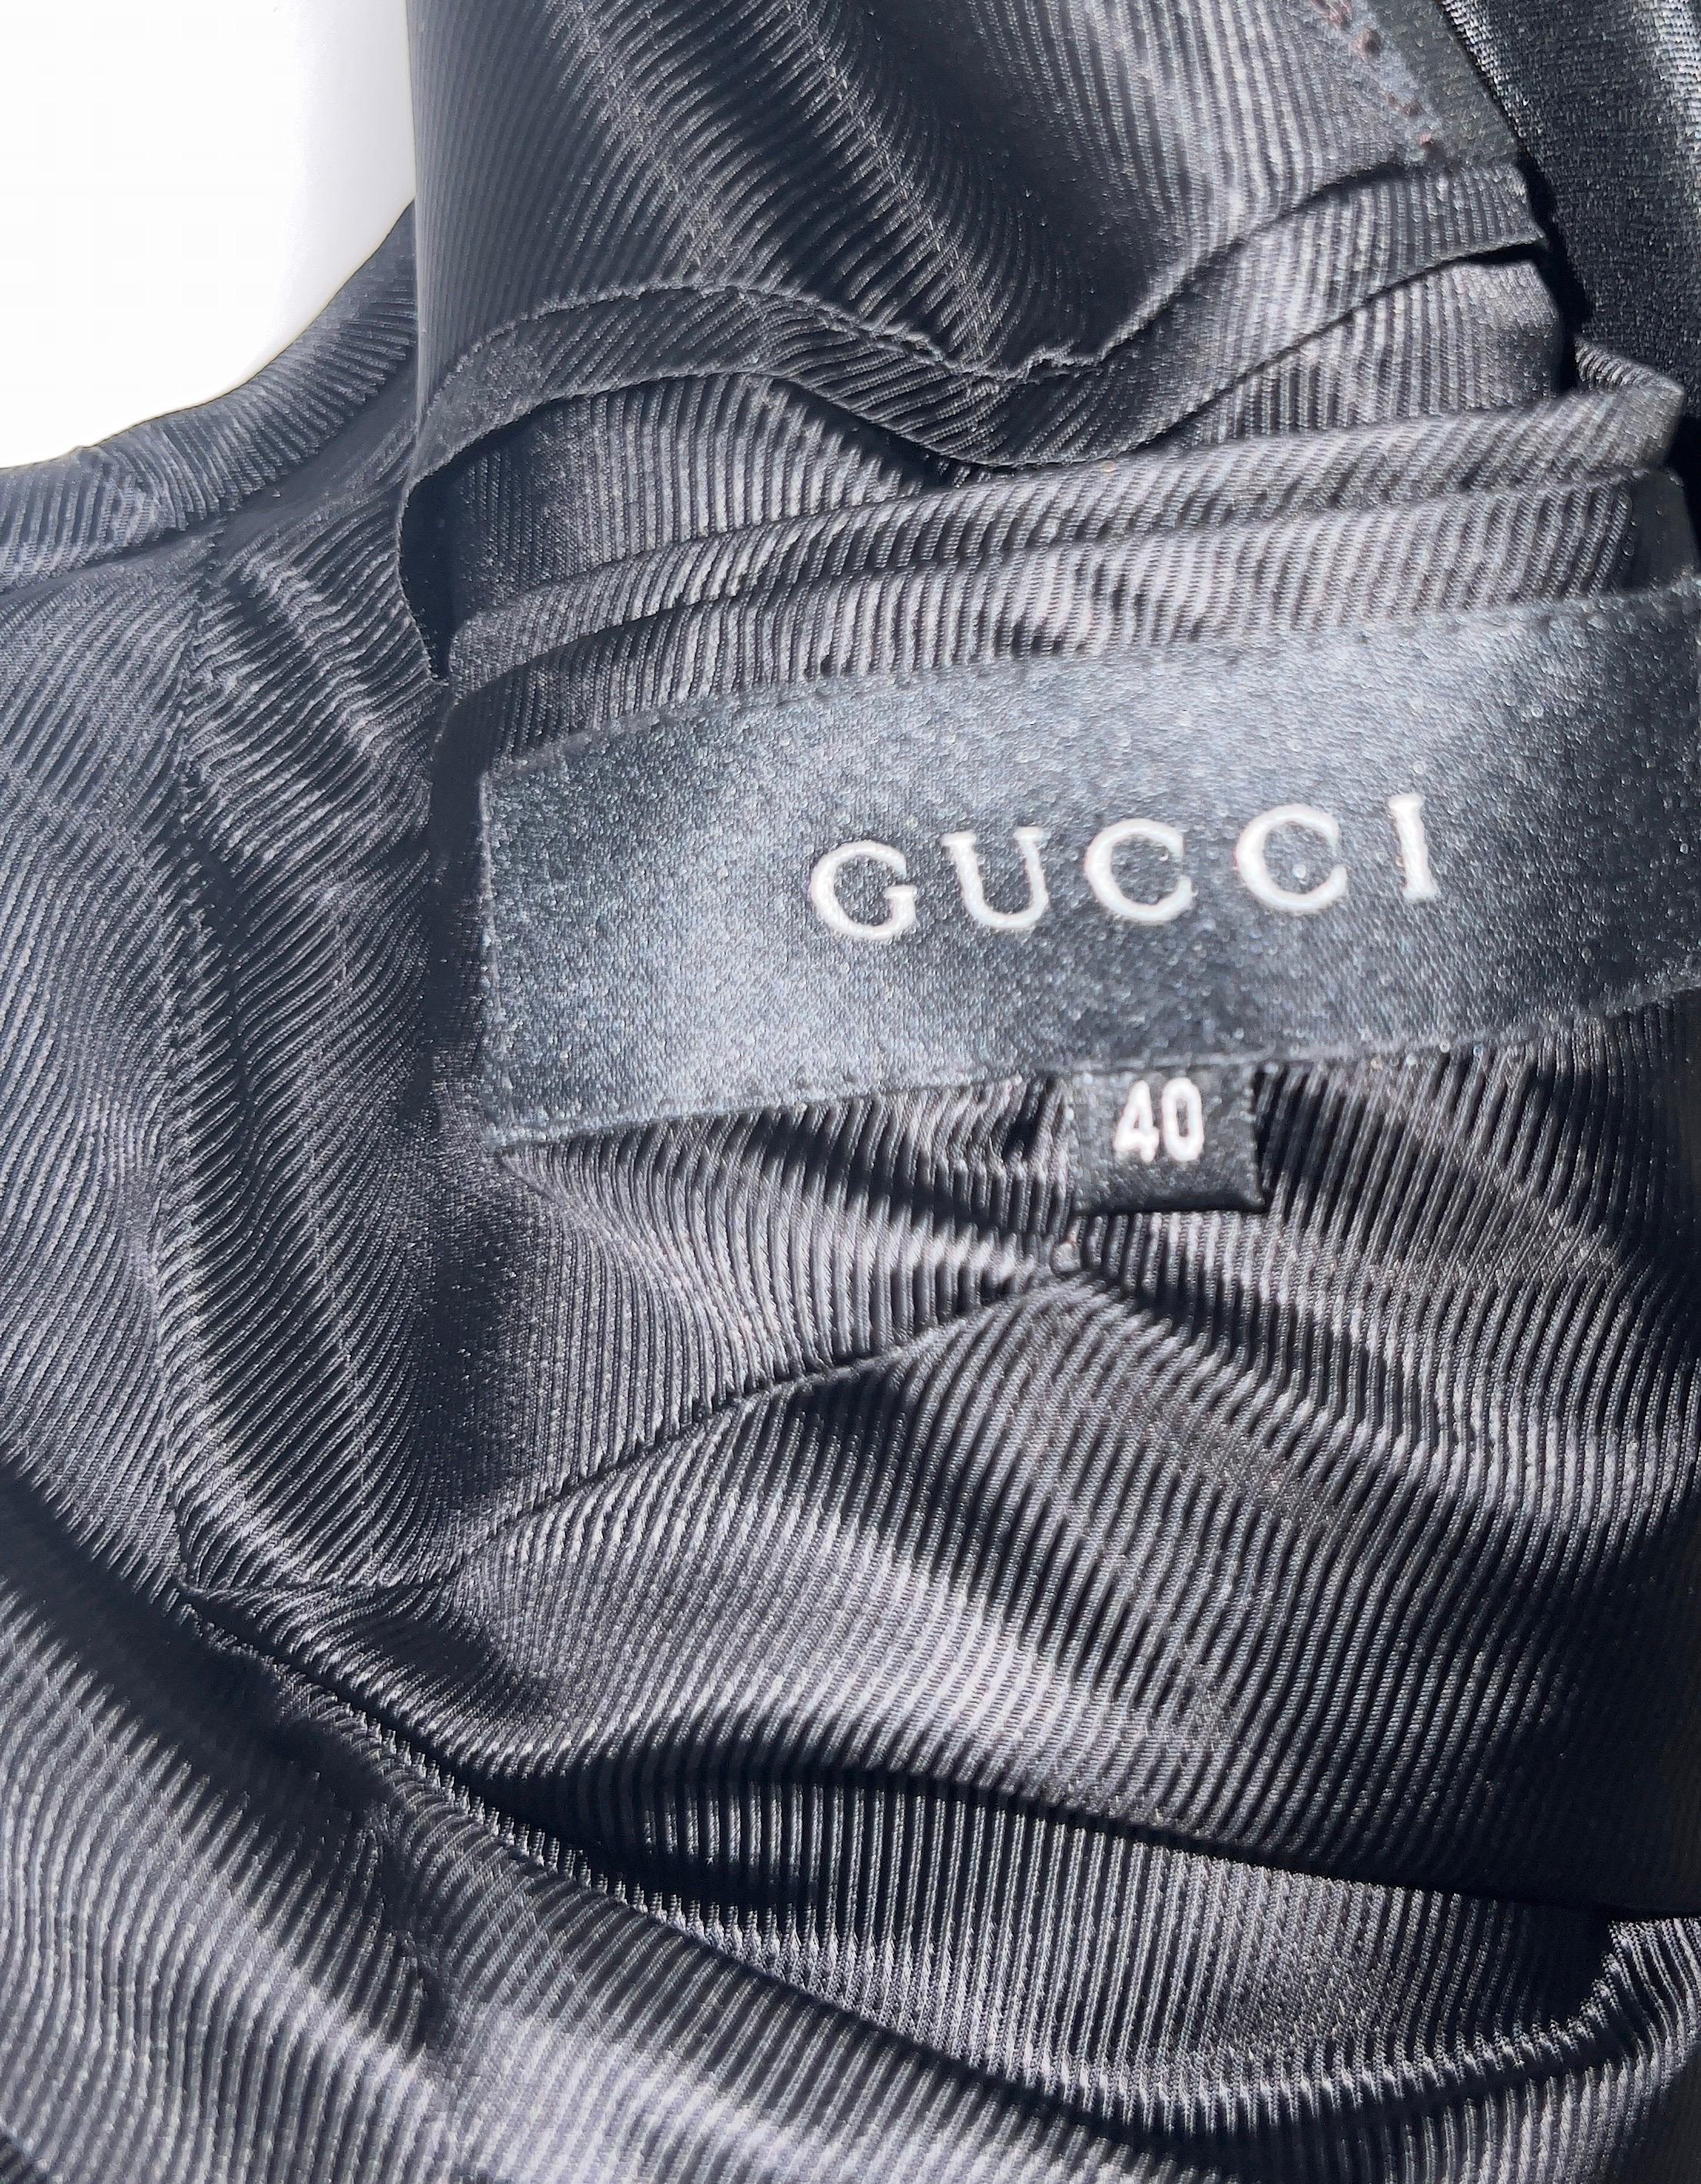 UNWORN Gucci by Tom Ford Y2K 2000 Tuxedo Style Black Wrap Jacket Pants Suit 40 2